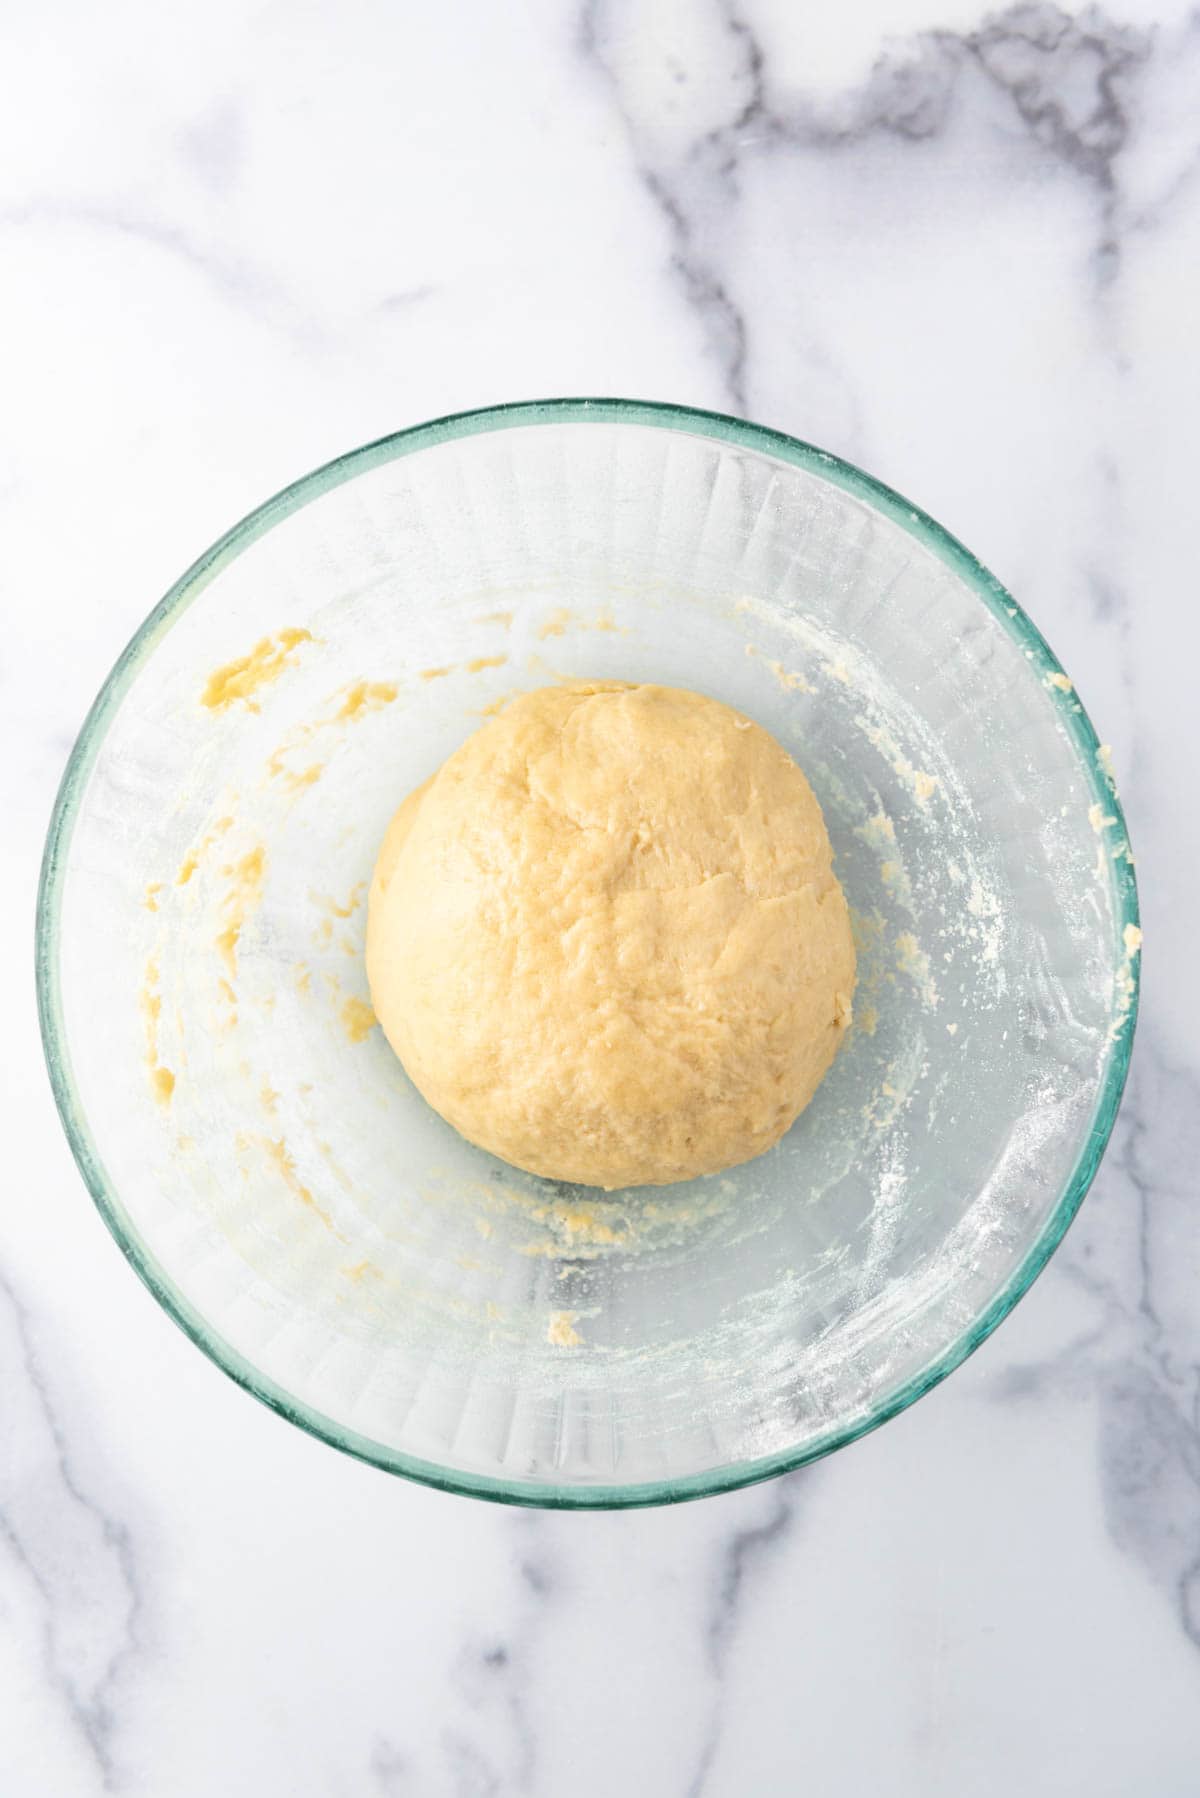 Kneaded small batch cinnamon roll dough in a glass bowl.